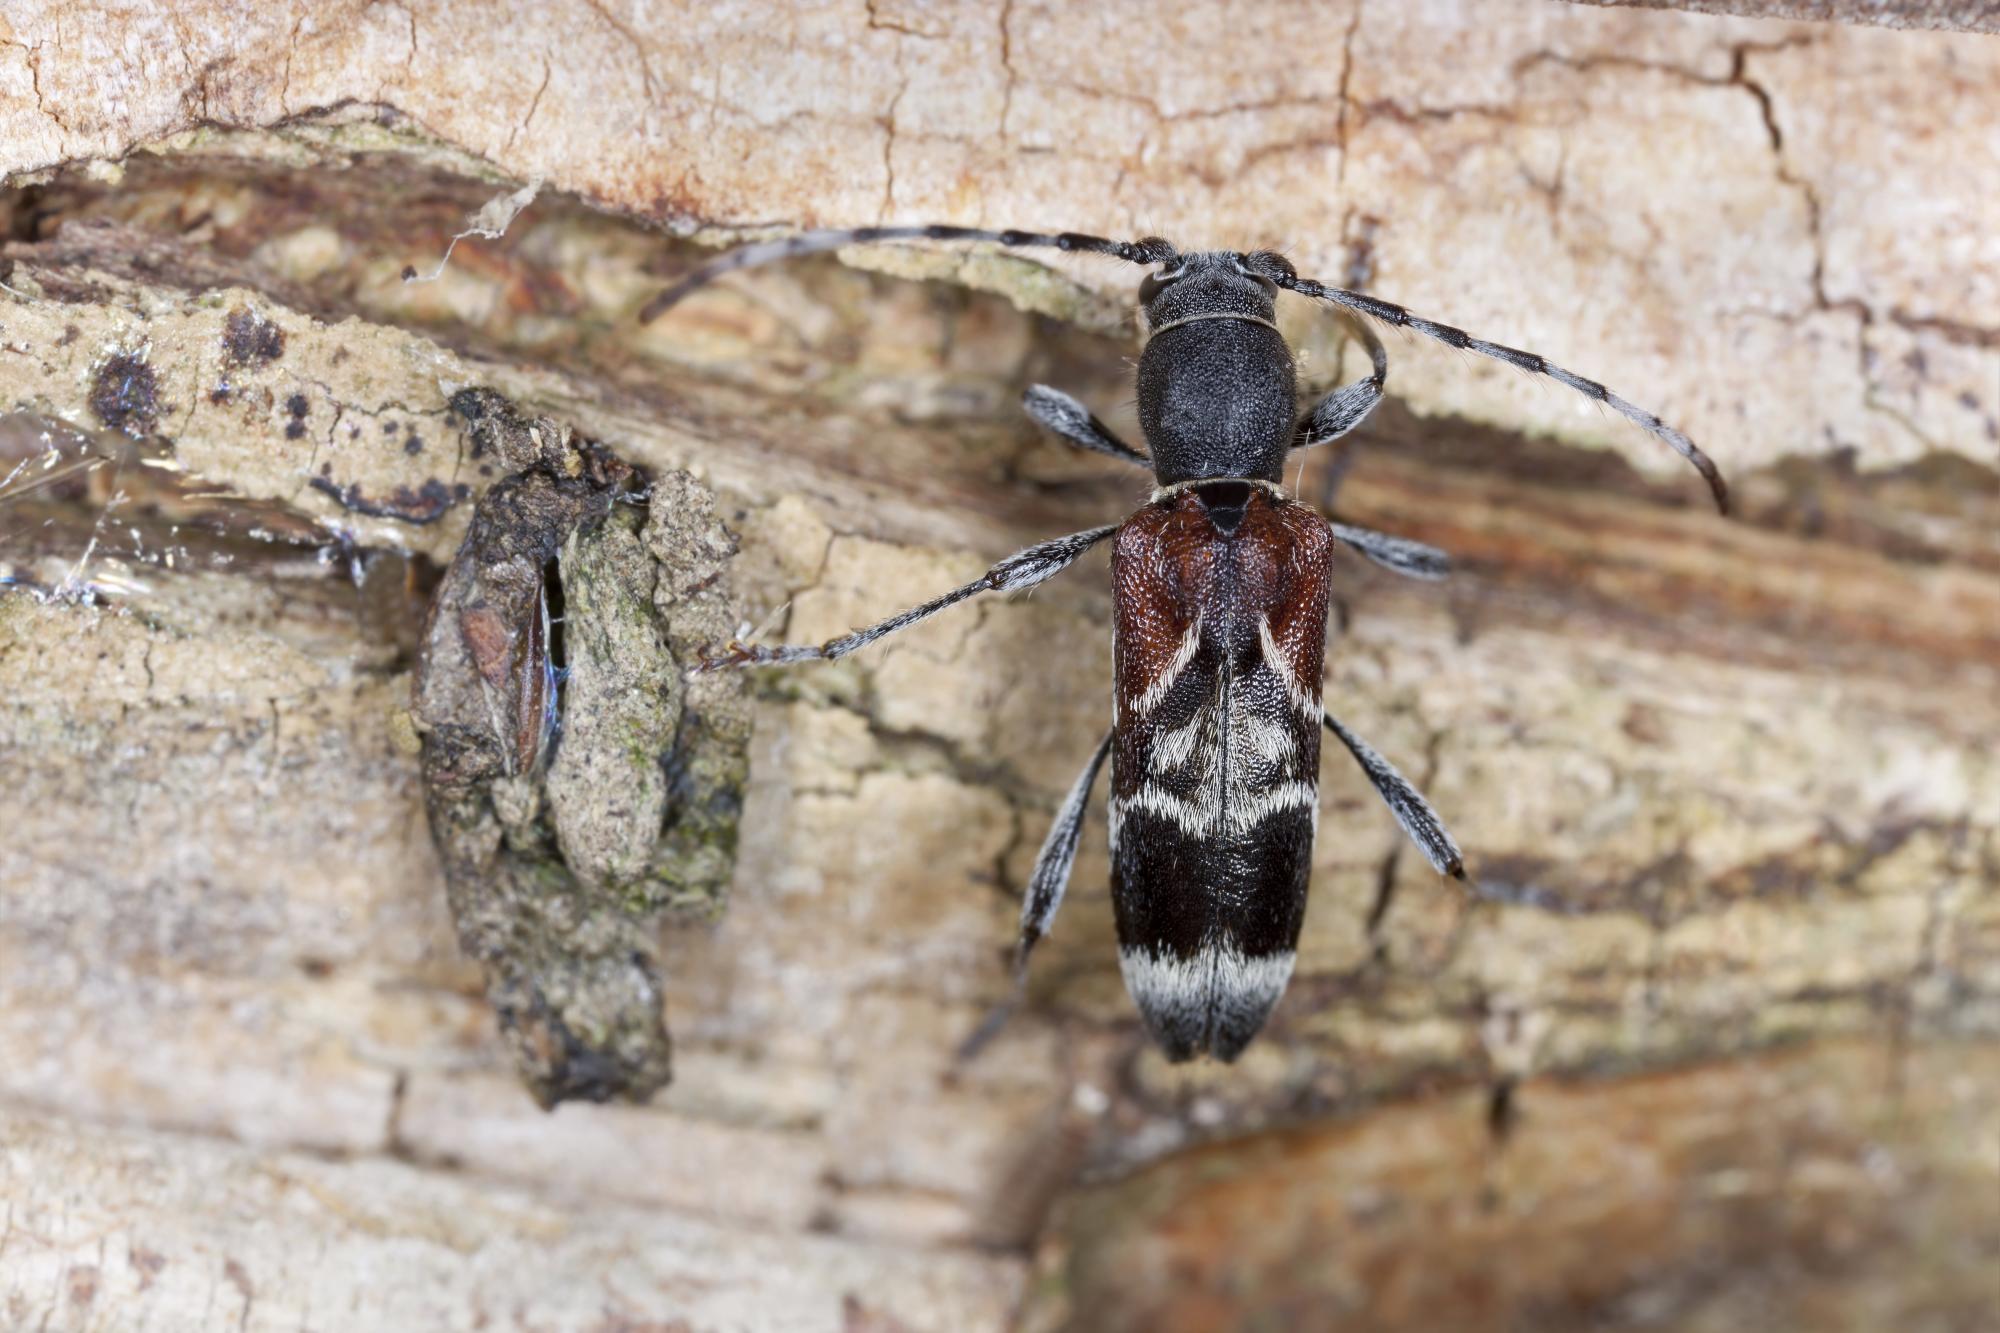 Rufous-shouldered longhorn beetle camouflaged against brown bark